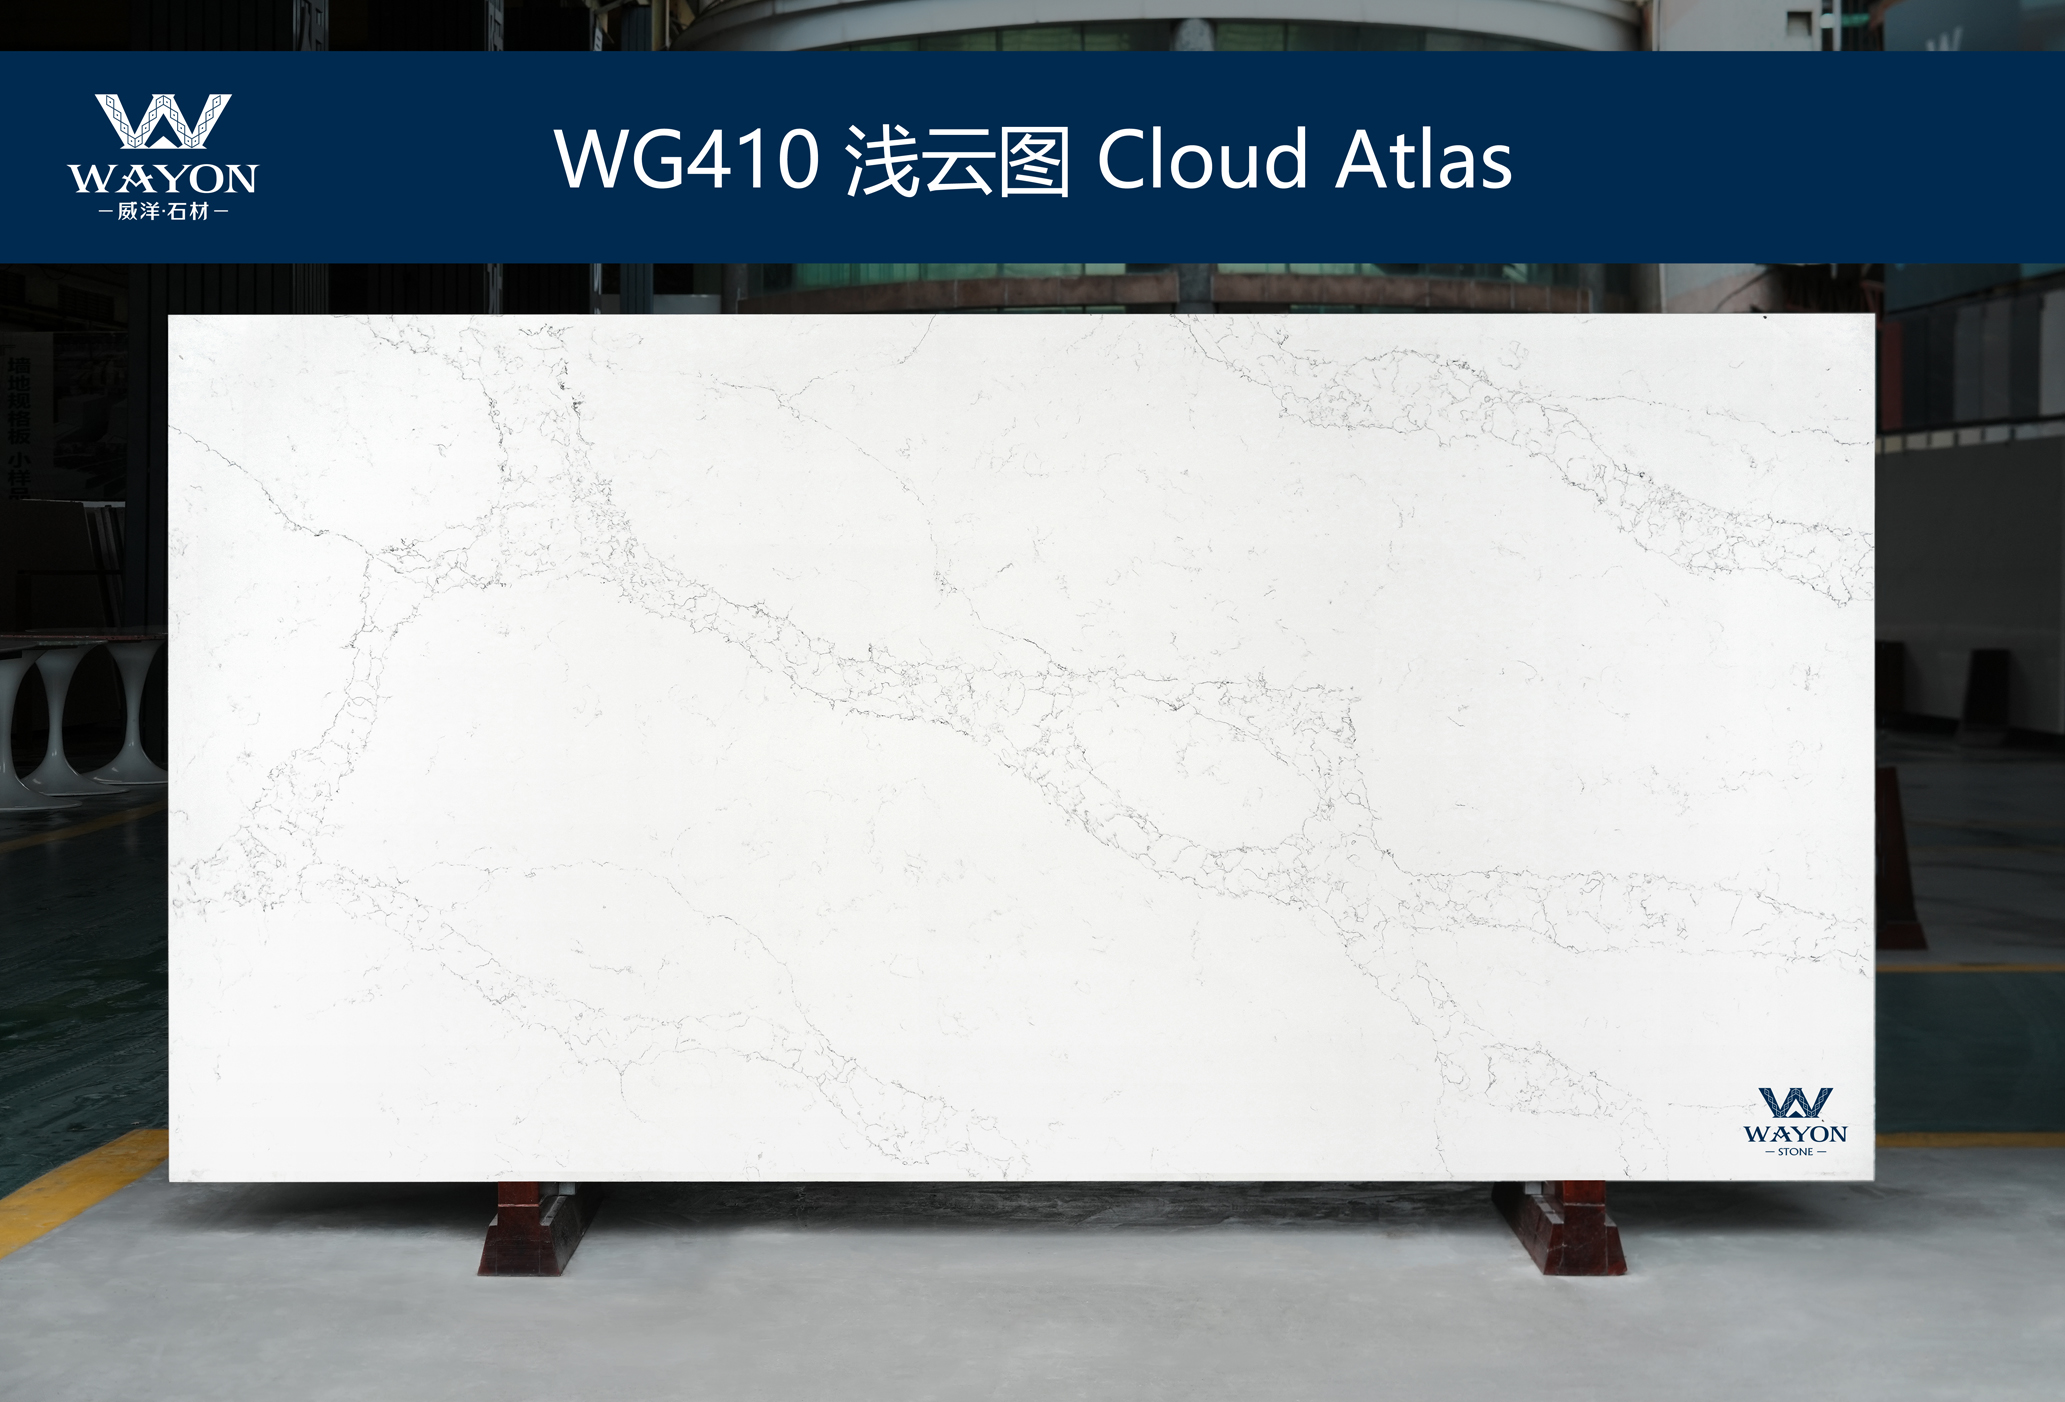 WG410 Cloud Atlas